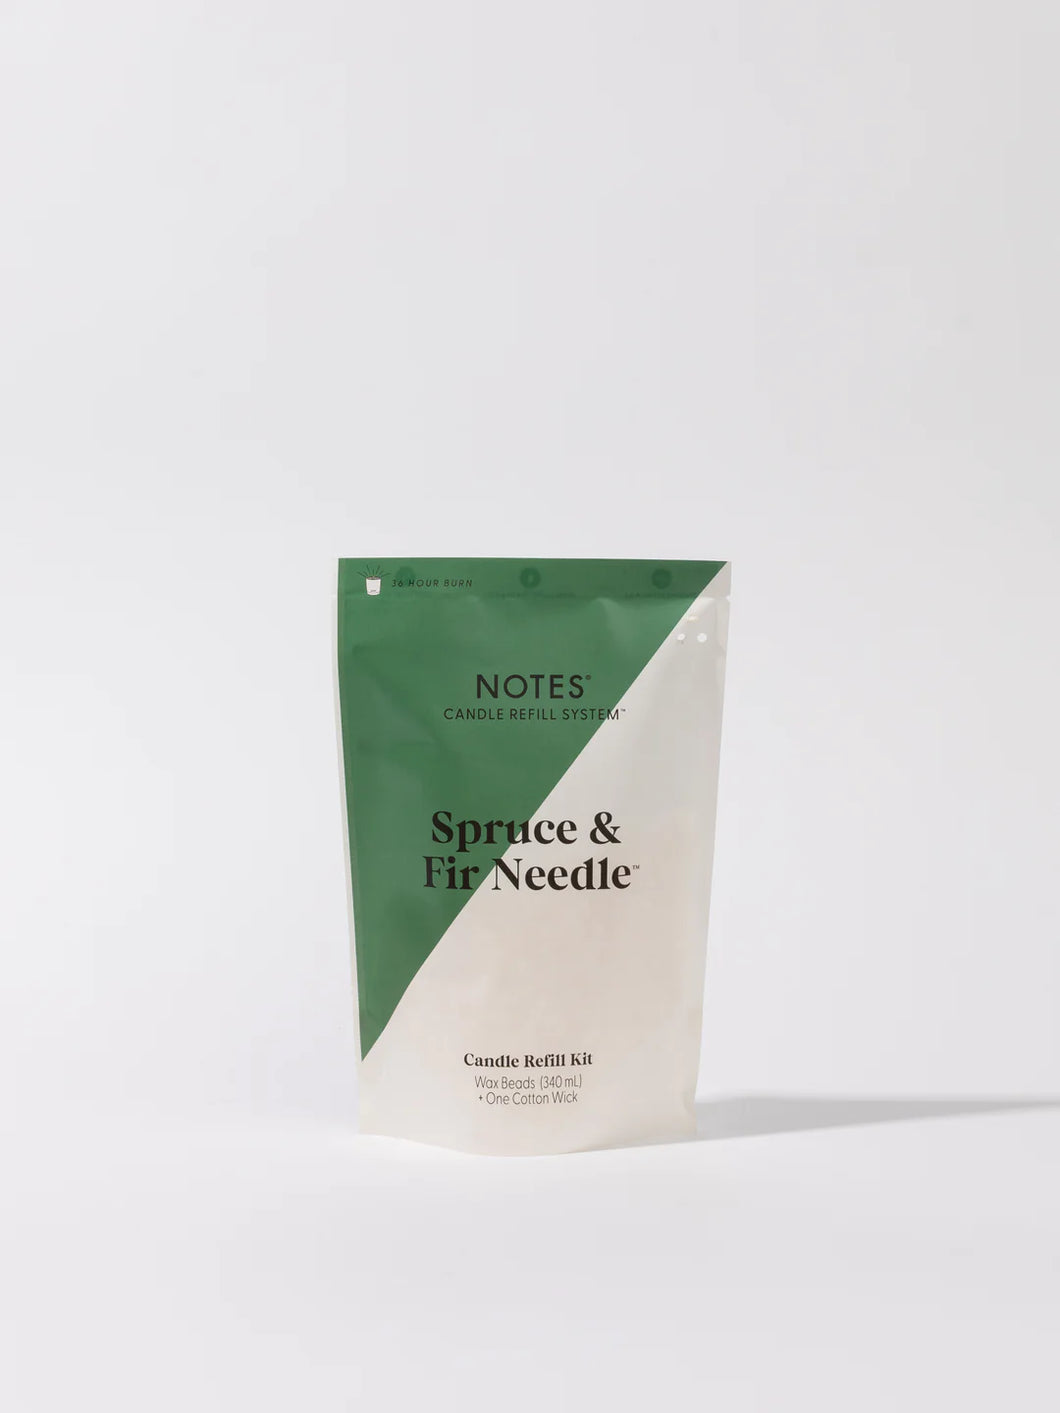 Spruce & Fir Needle Notes Refill